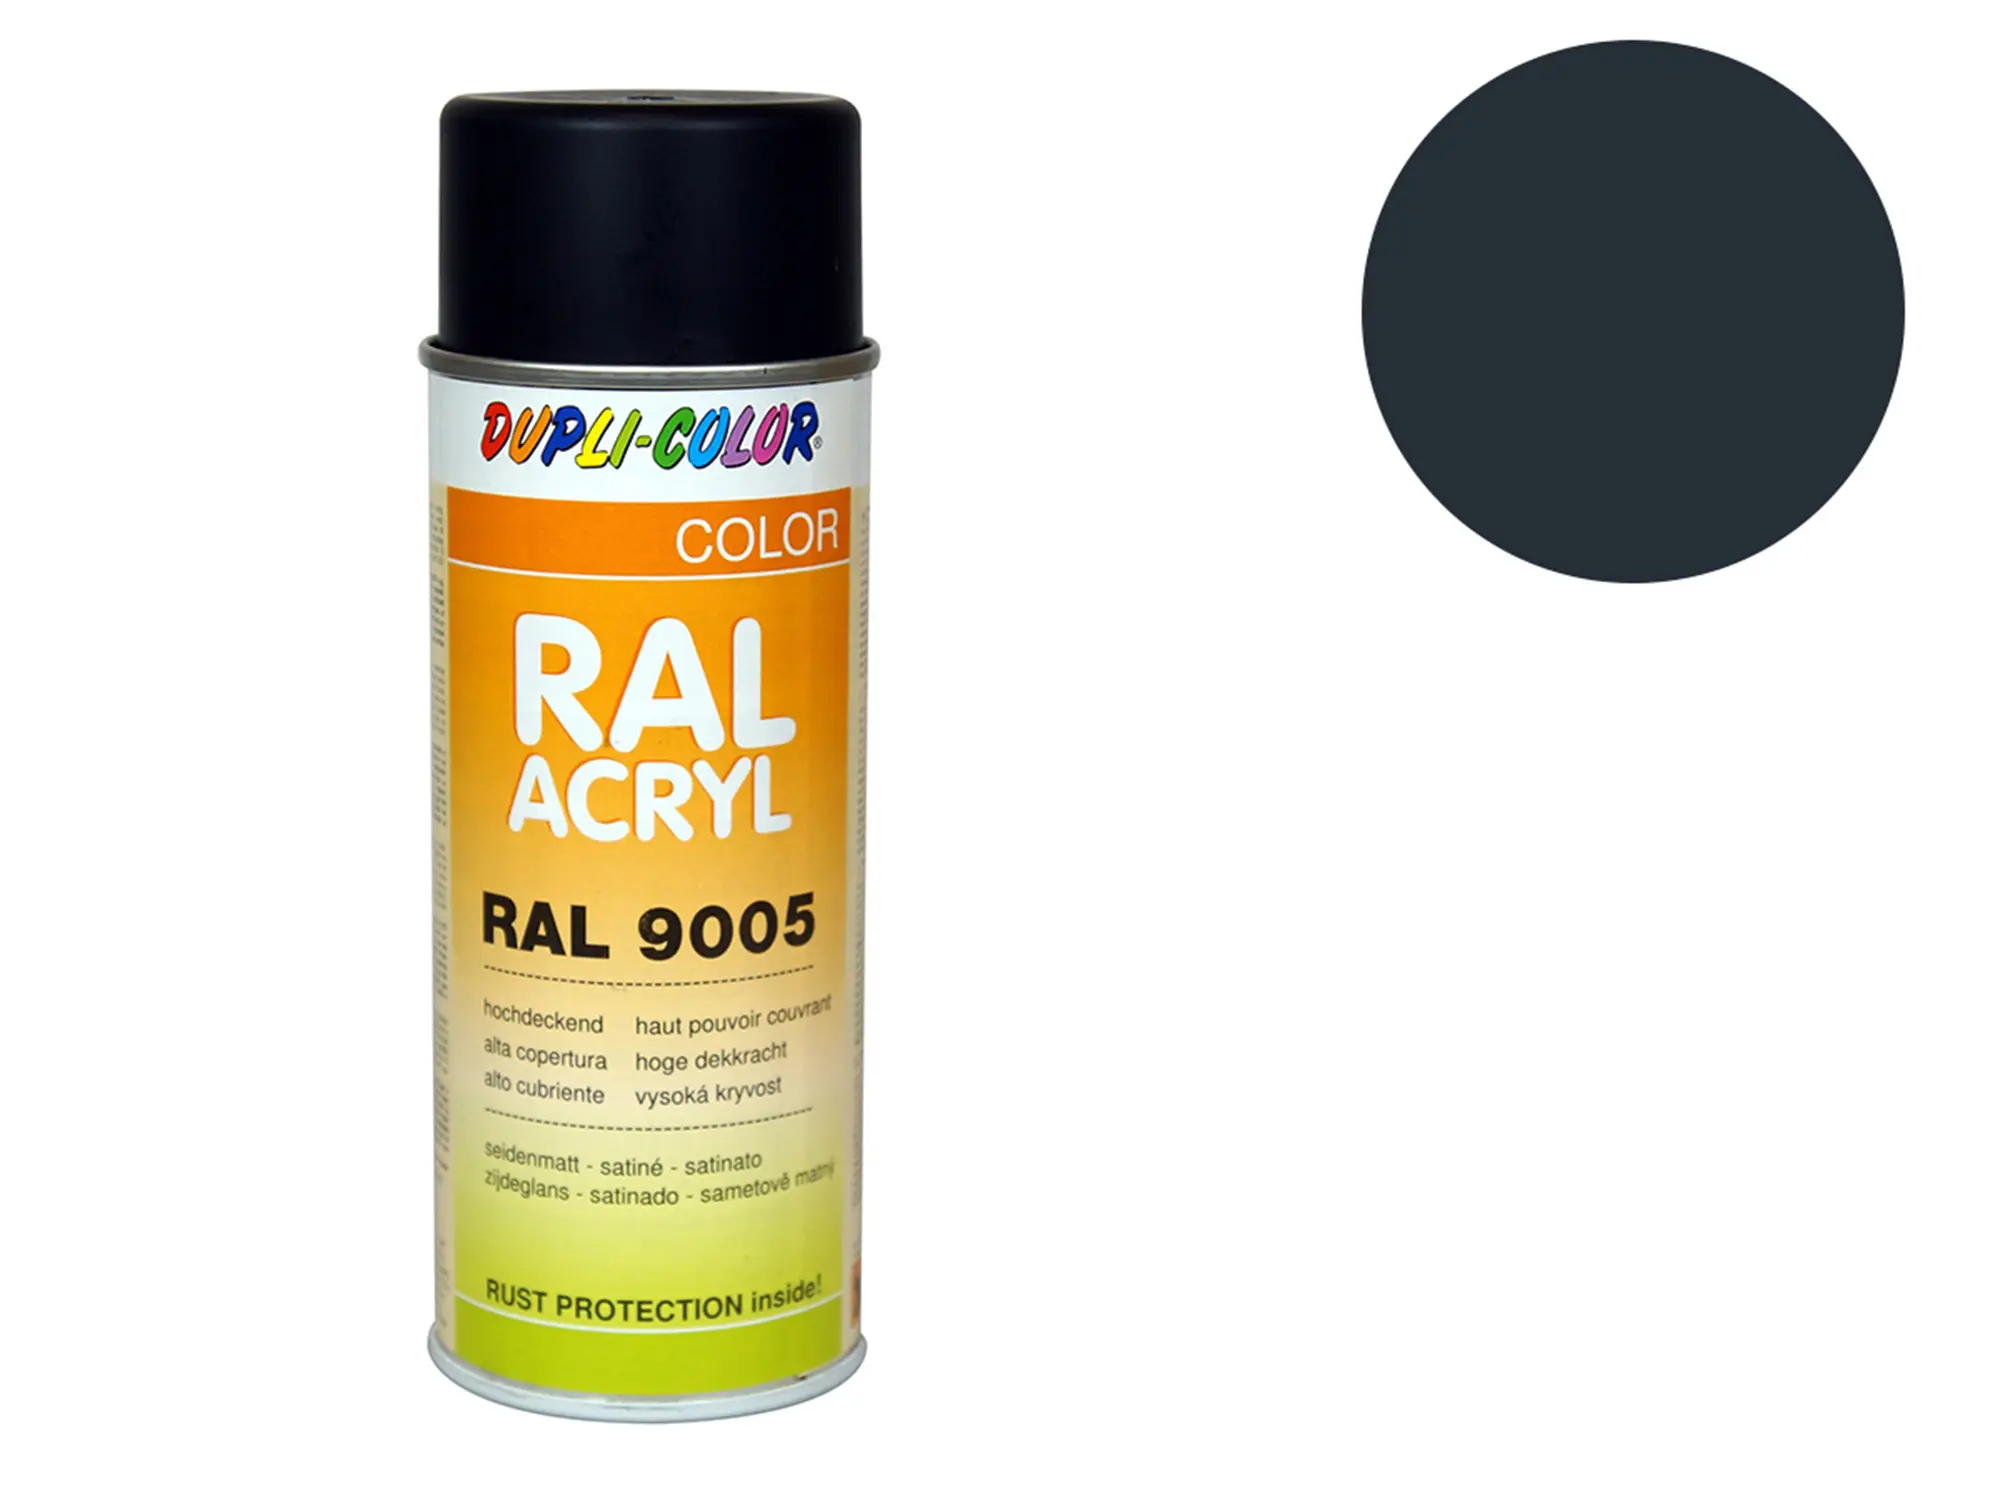 Dupli-Color Acryl-Spray RAL 7016 anthrazitgrau, seidenmatt 400 ml, Art.-Nr.: 10064840 - Bild 1